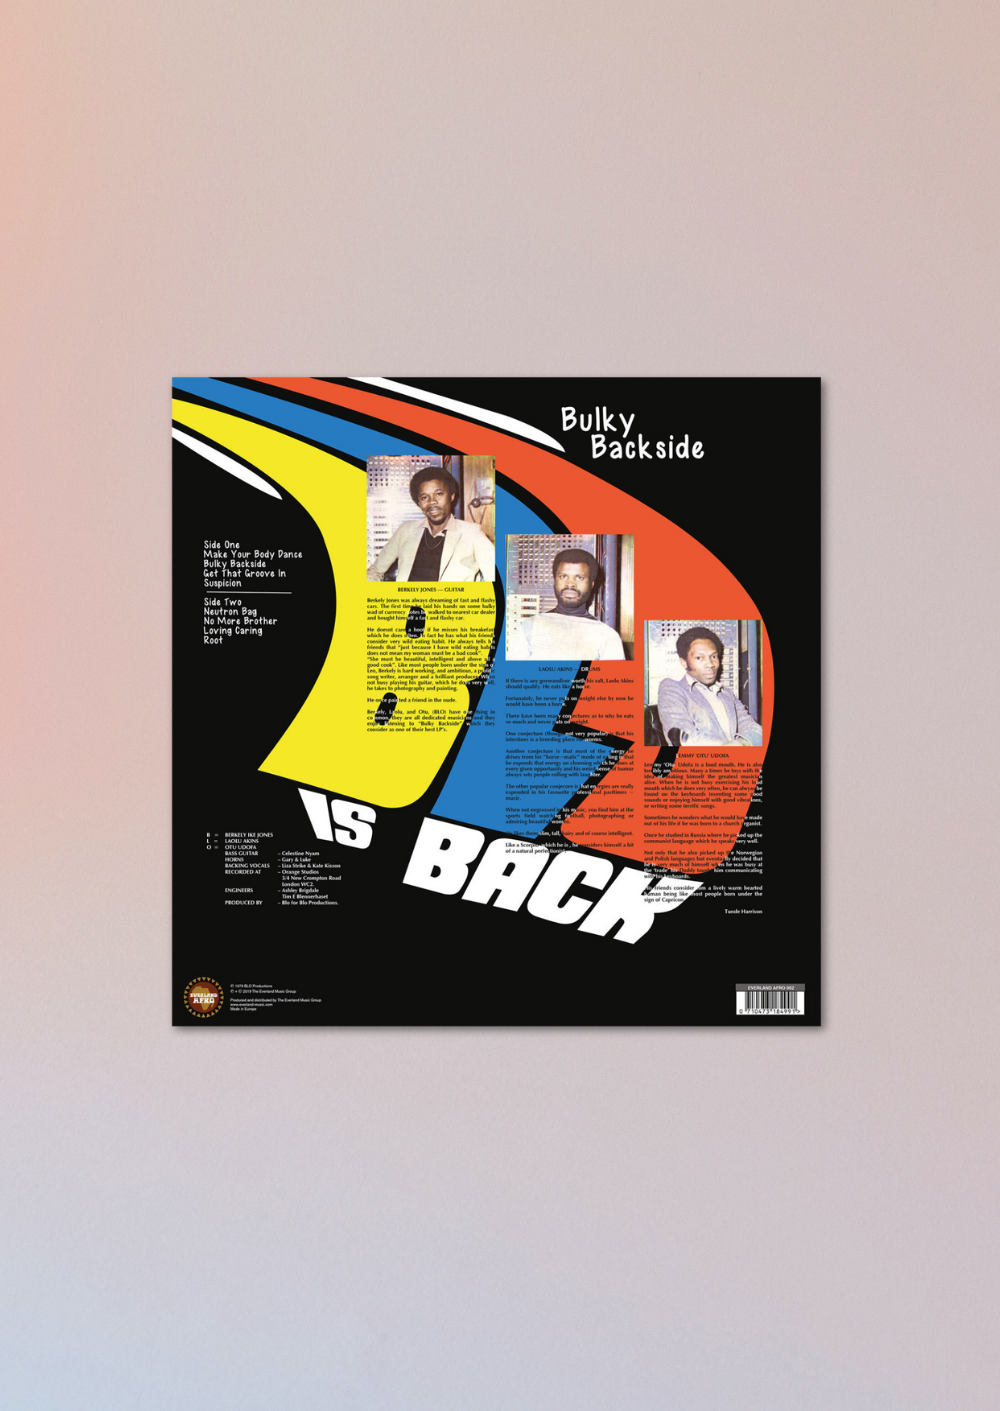 Bulky Backside - Blo is Back - Vinyl Record